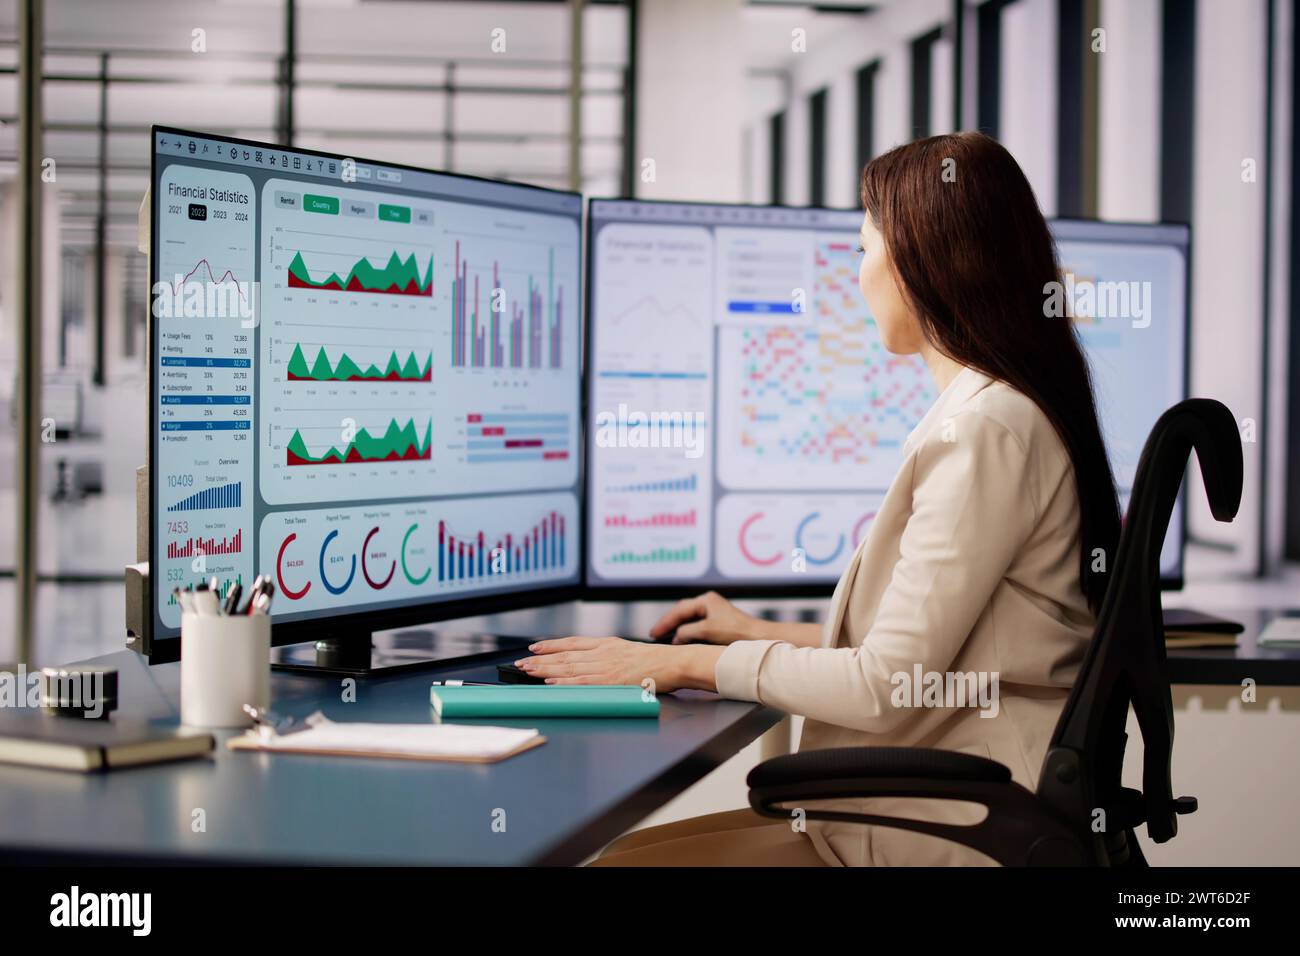 Business Data Analytics Dashboard And KPI Performance Stock Photo